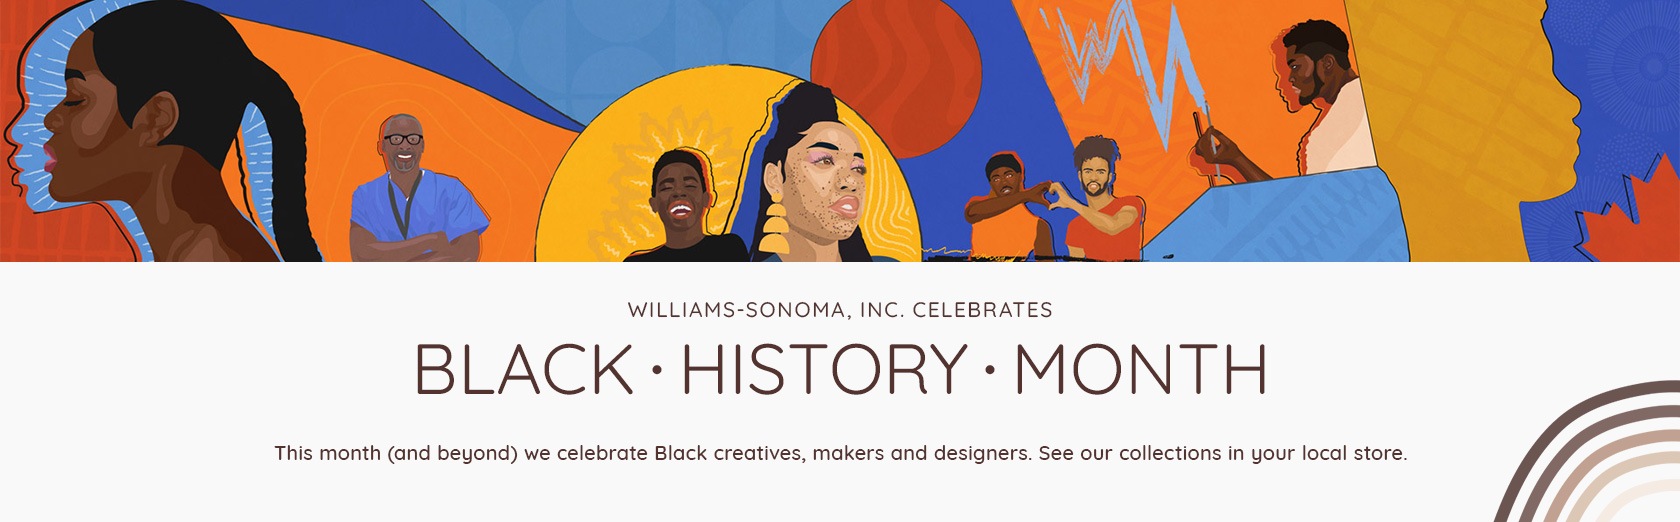 Williams-Sonoma Inc. Celebrates Black History Month